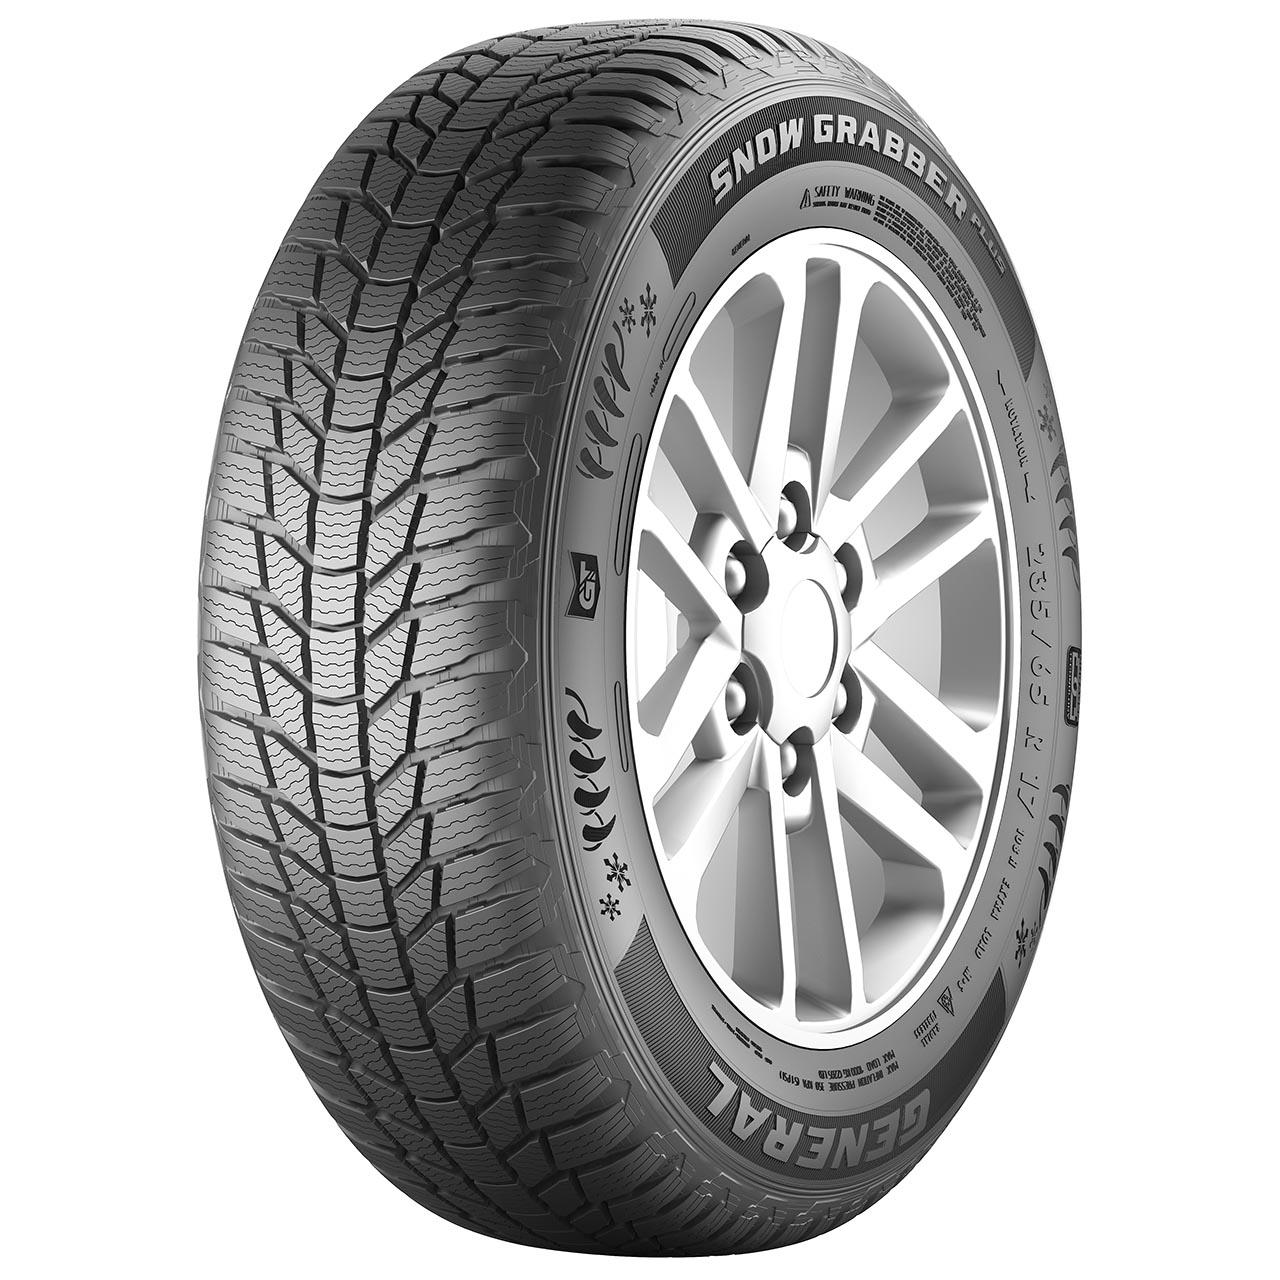 General Tire Snow Grabber Plus 225/65R17 106H XL FR